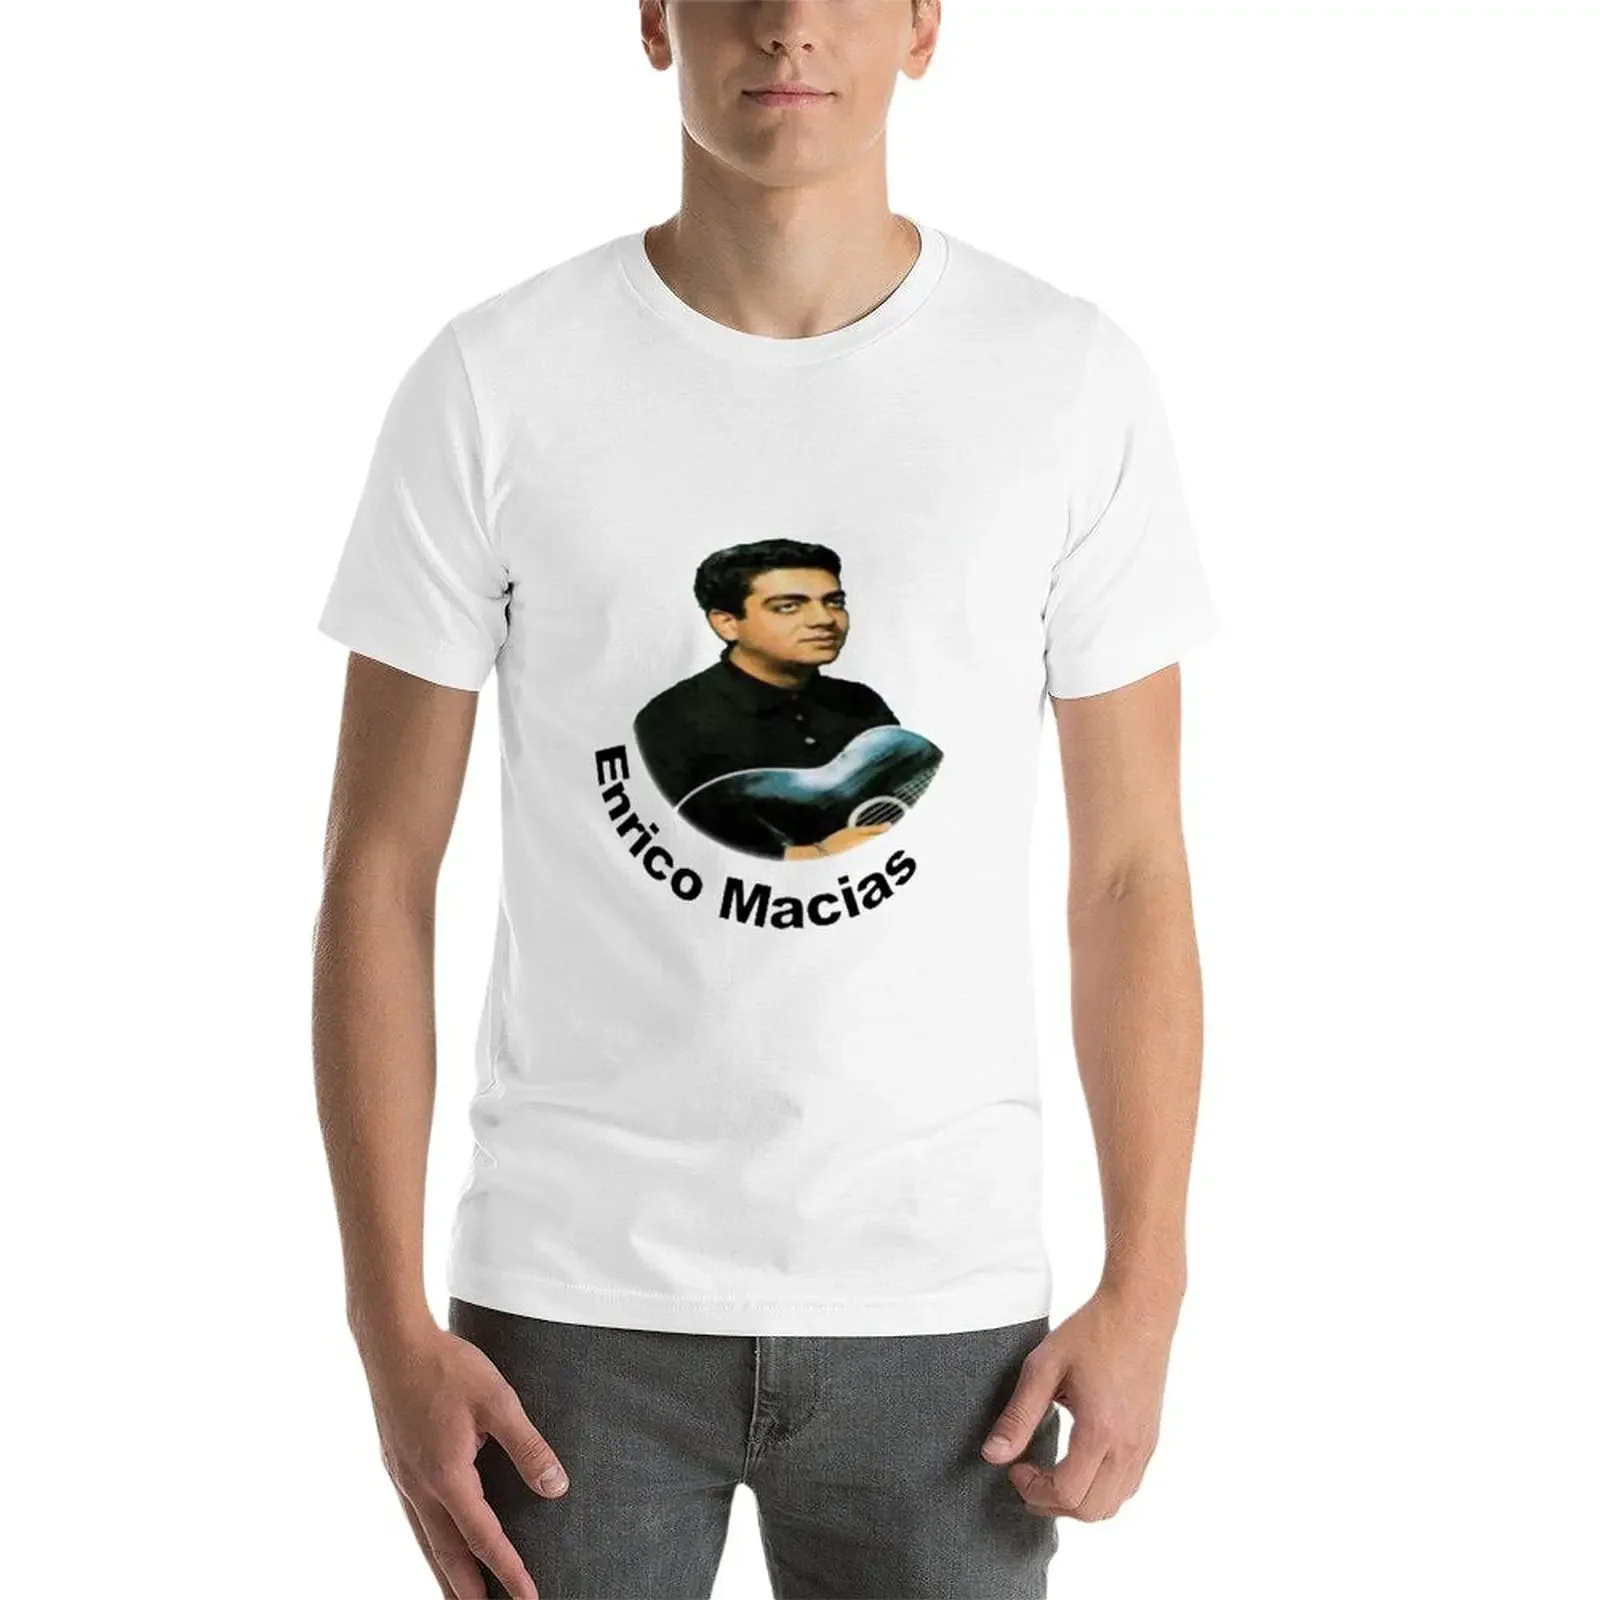 Camiseta de Enrico Macias para hombre, Camisa de algodón con estampado de cantante francés, tops bonitos de anime